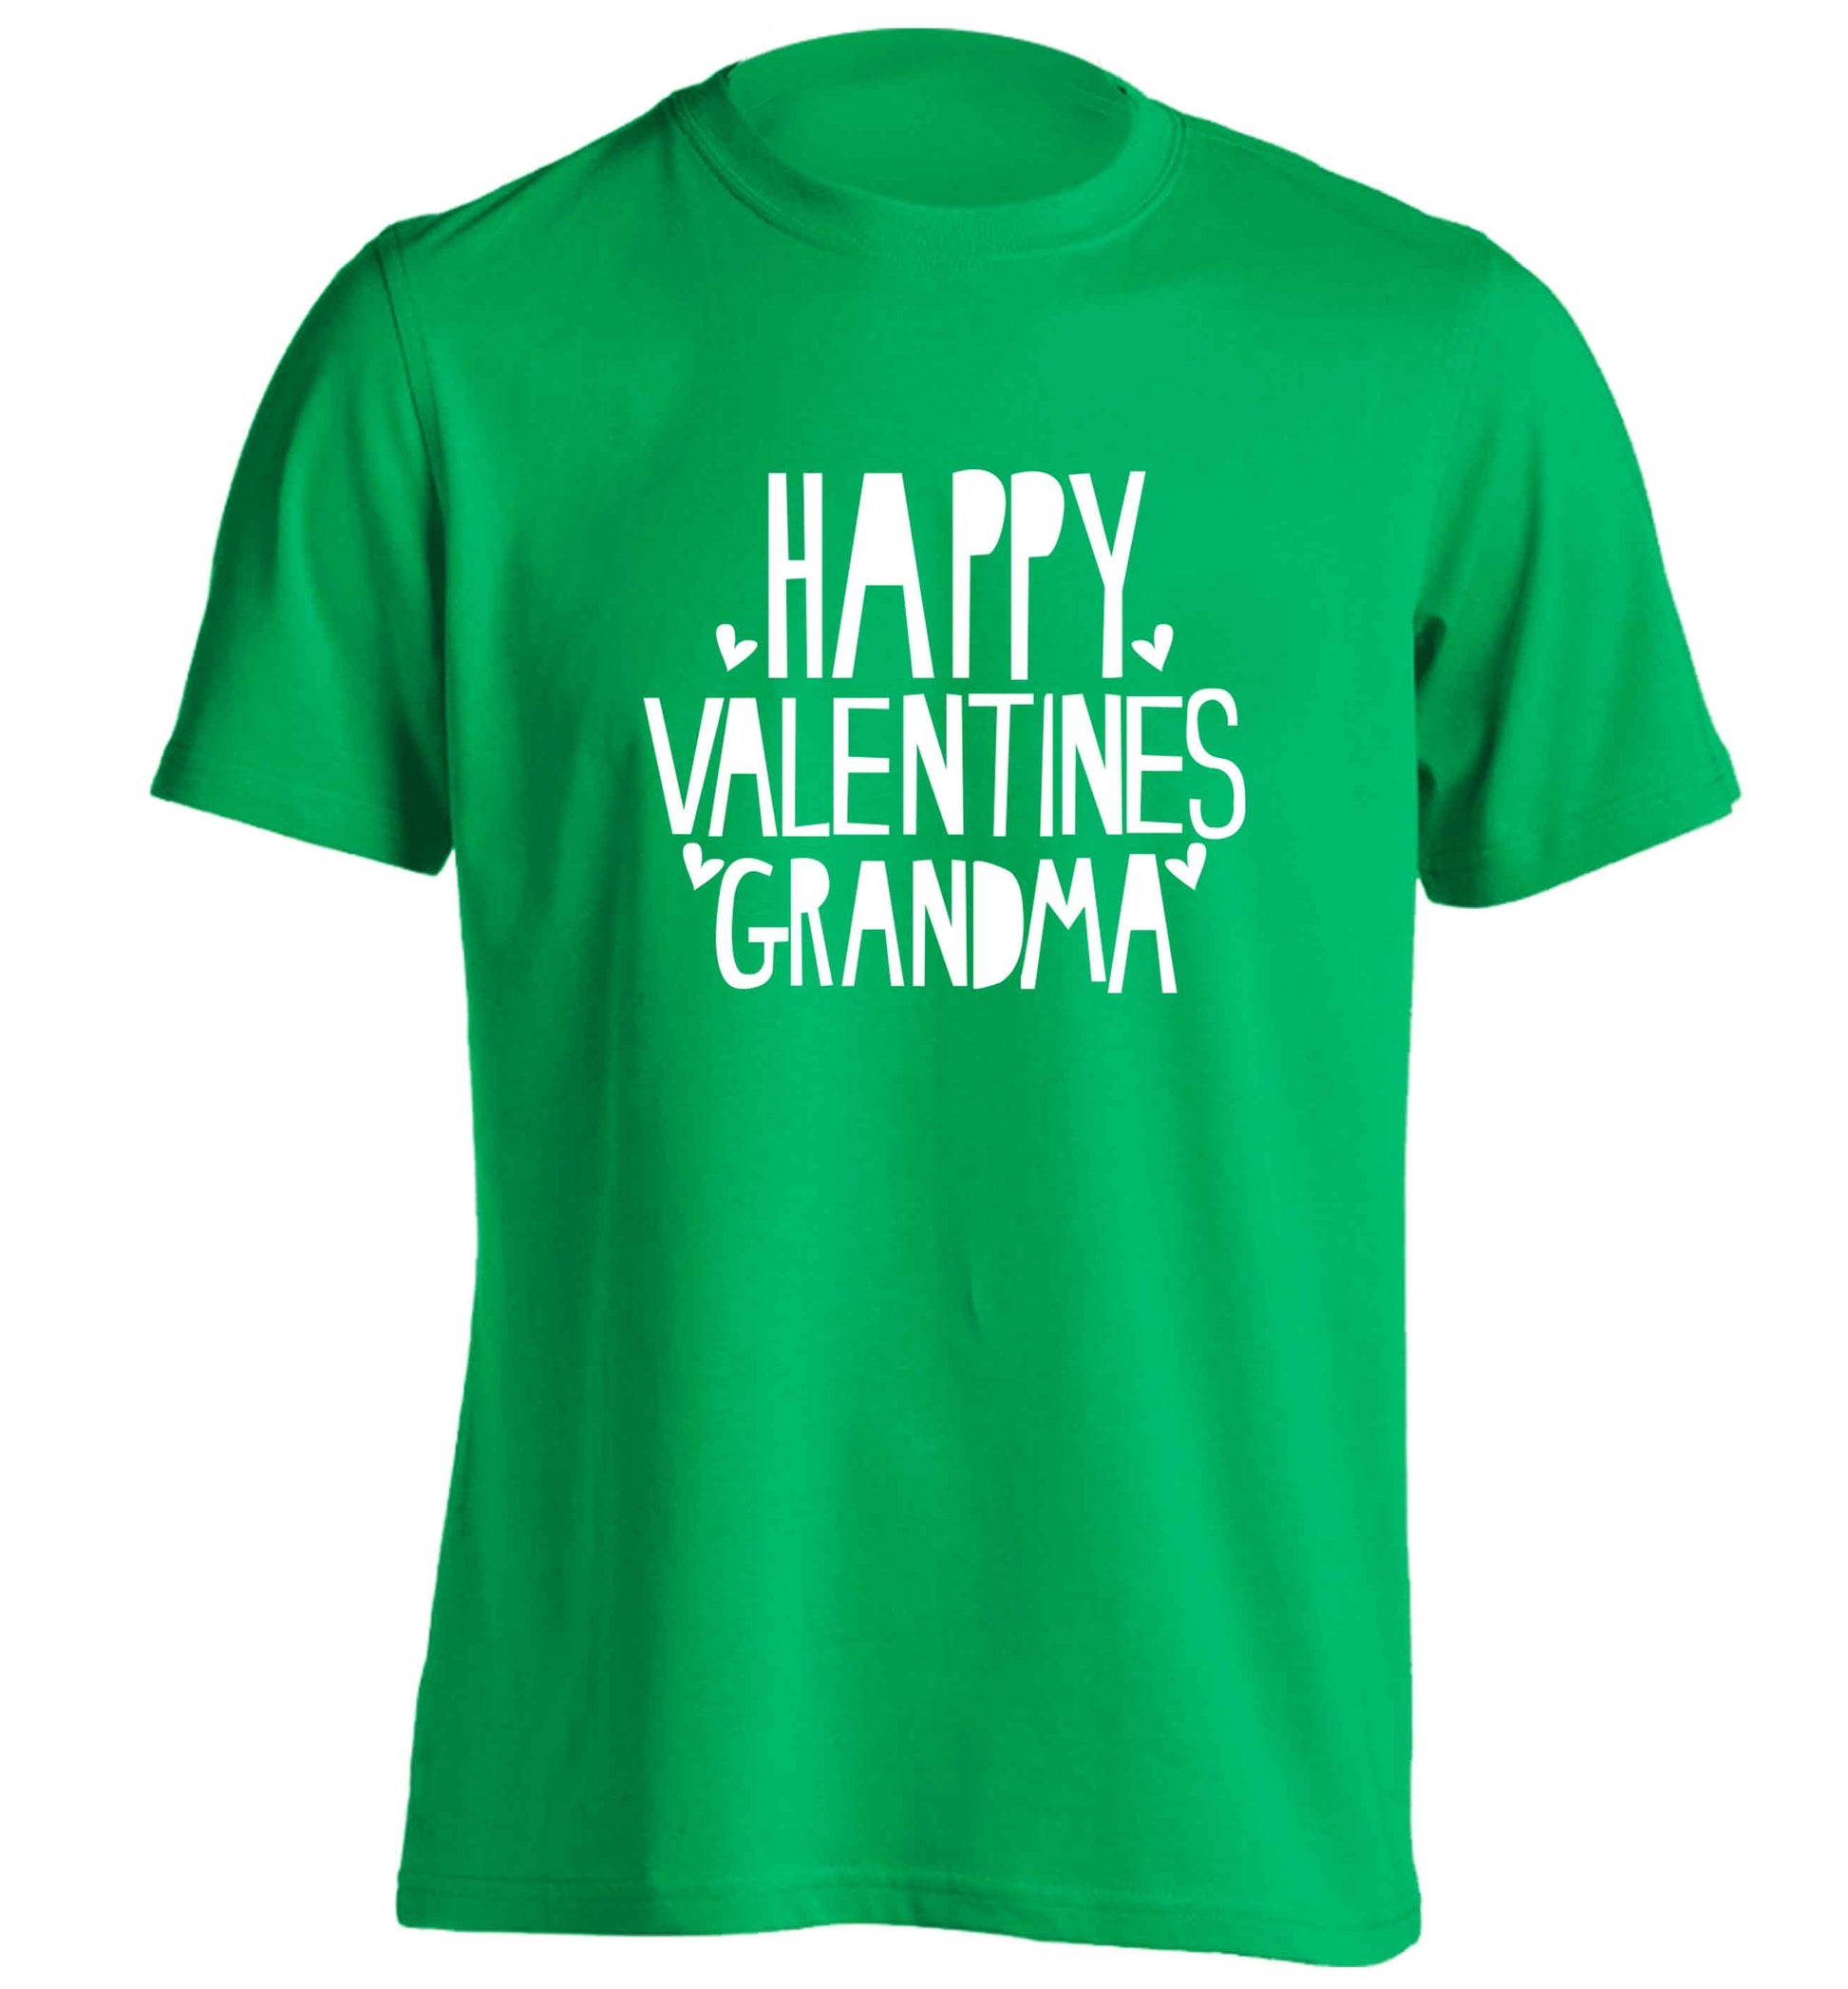 Happy valentines grandma adults unisex green Tshirt 2XL